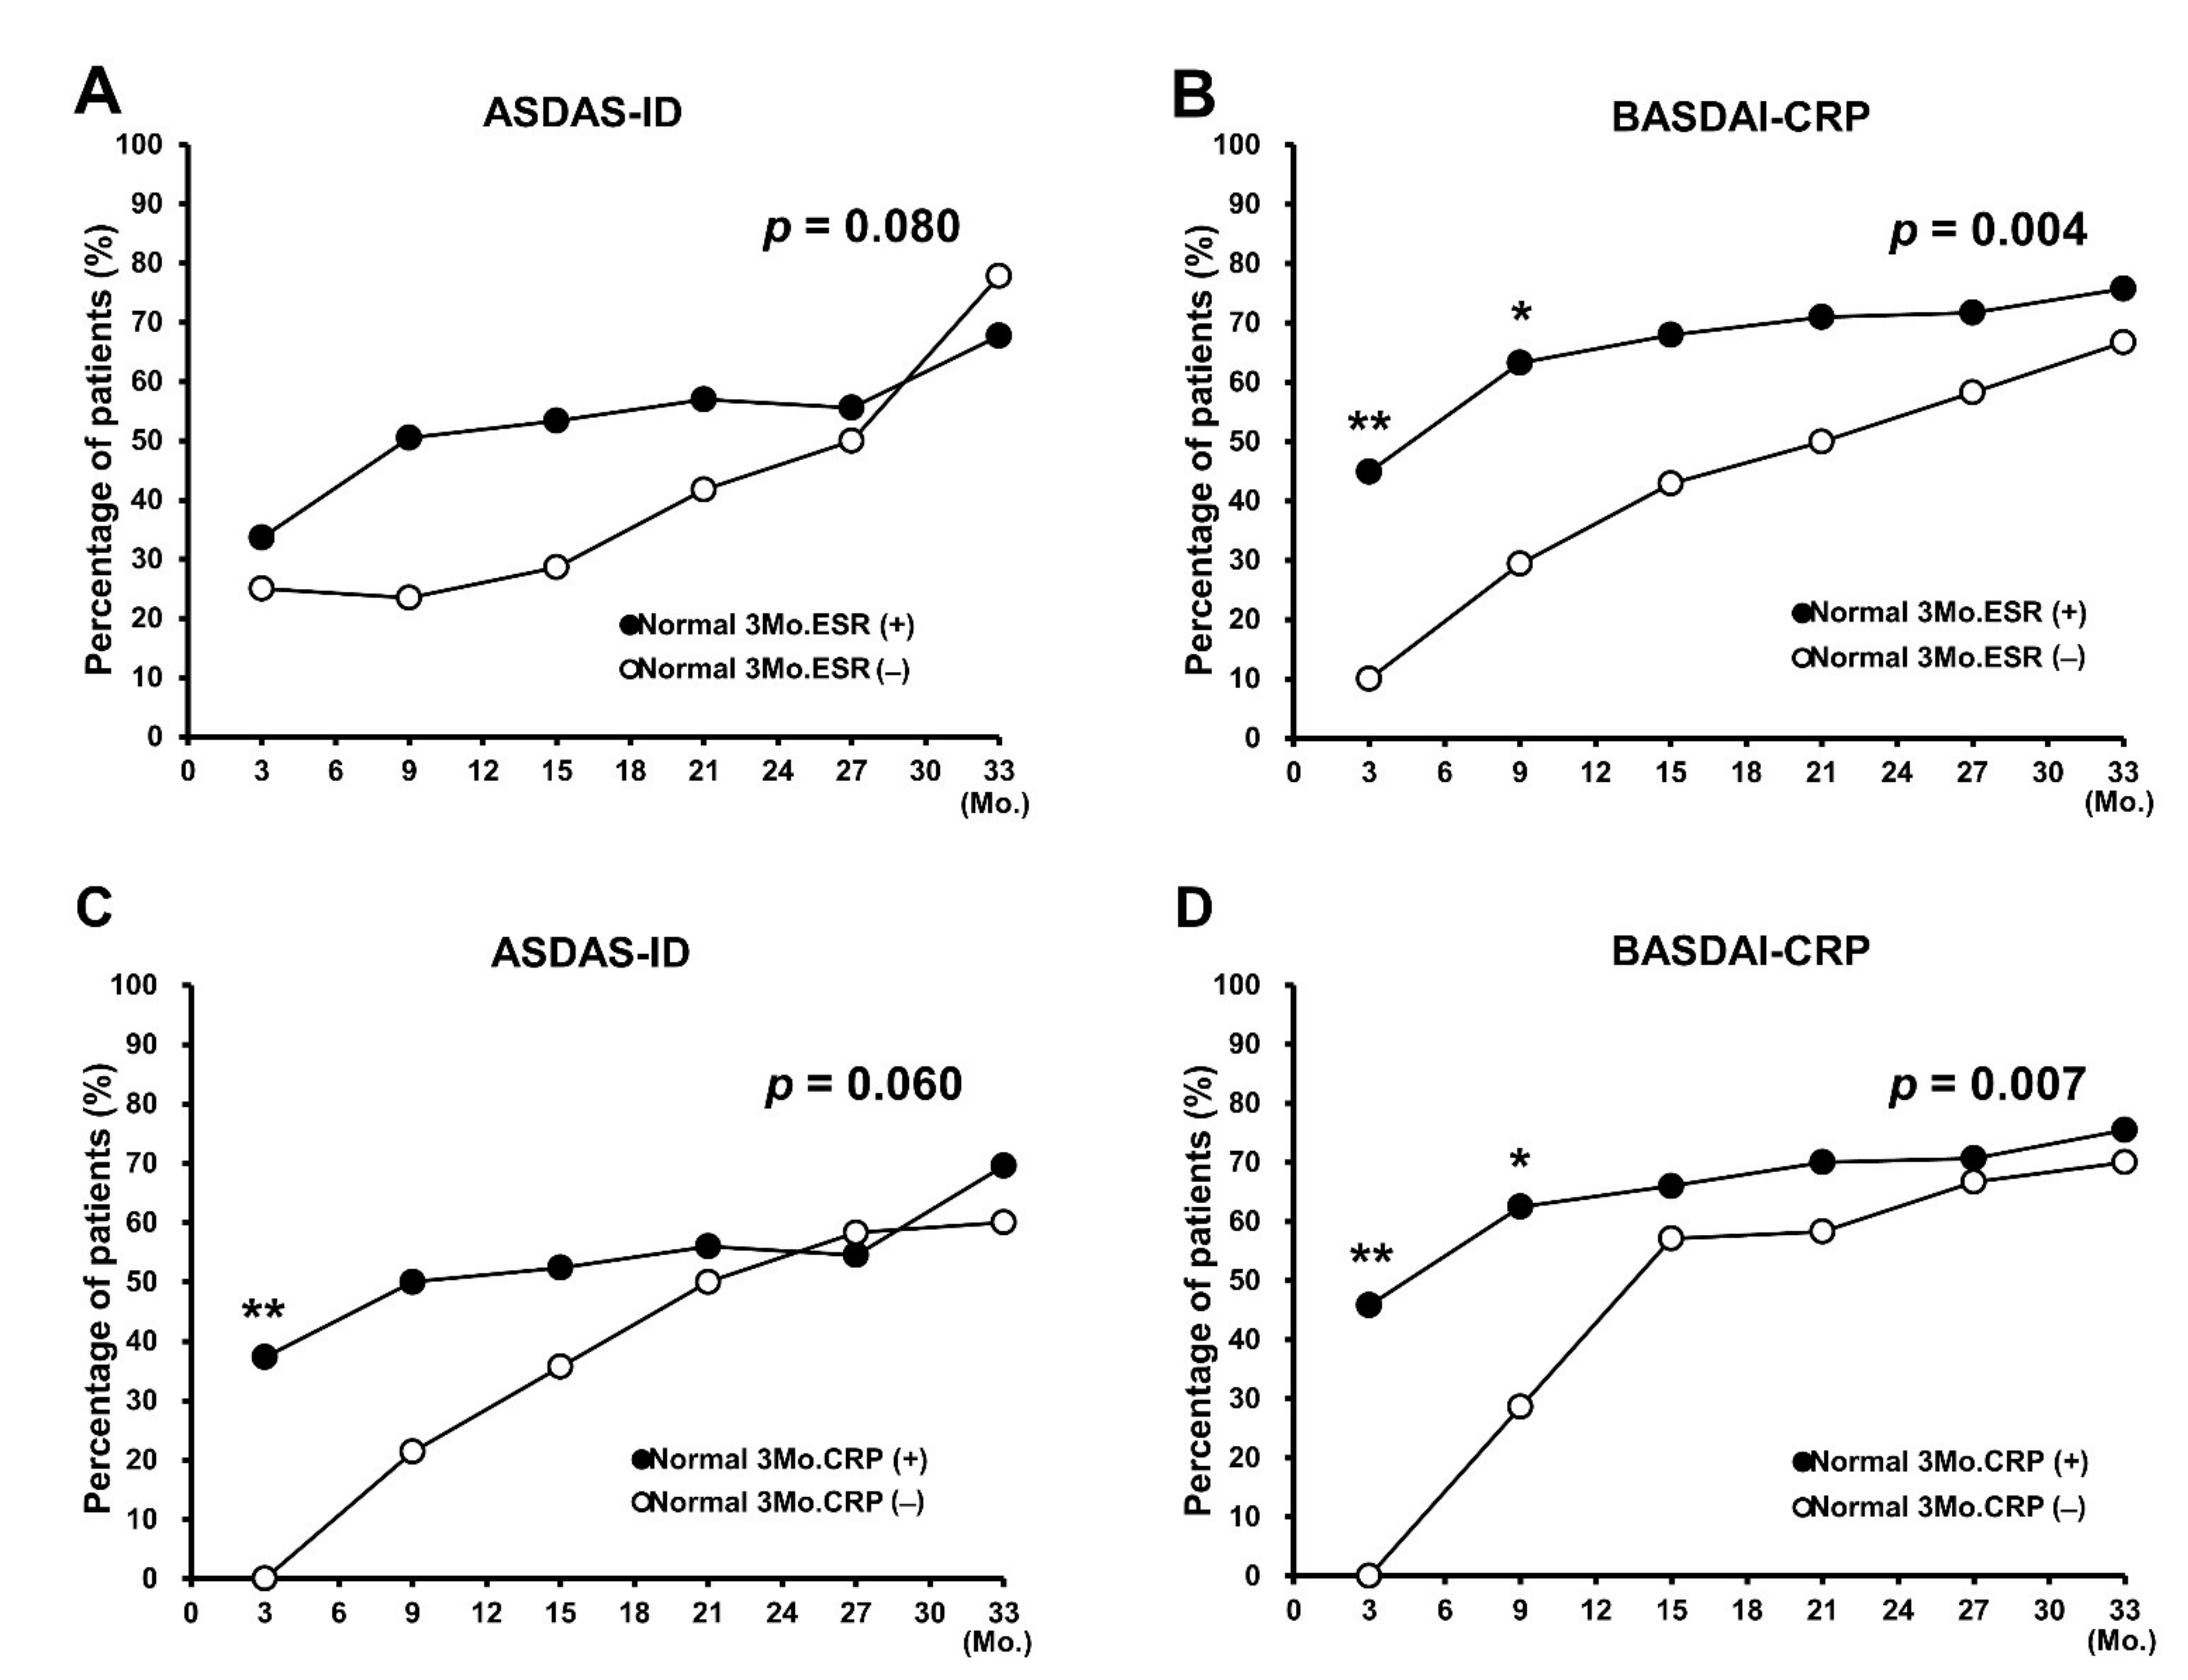 Scoring of disease activity using BASDAI and ASDAS method in ankylosing  spondylitis].